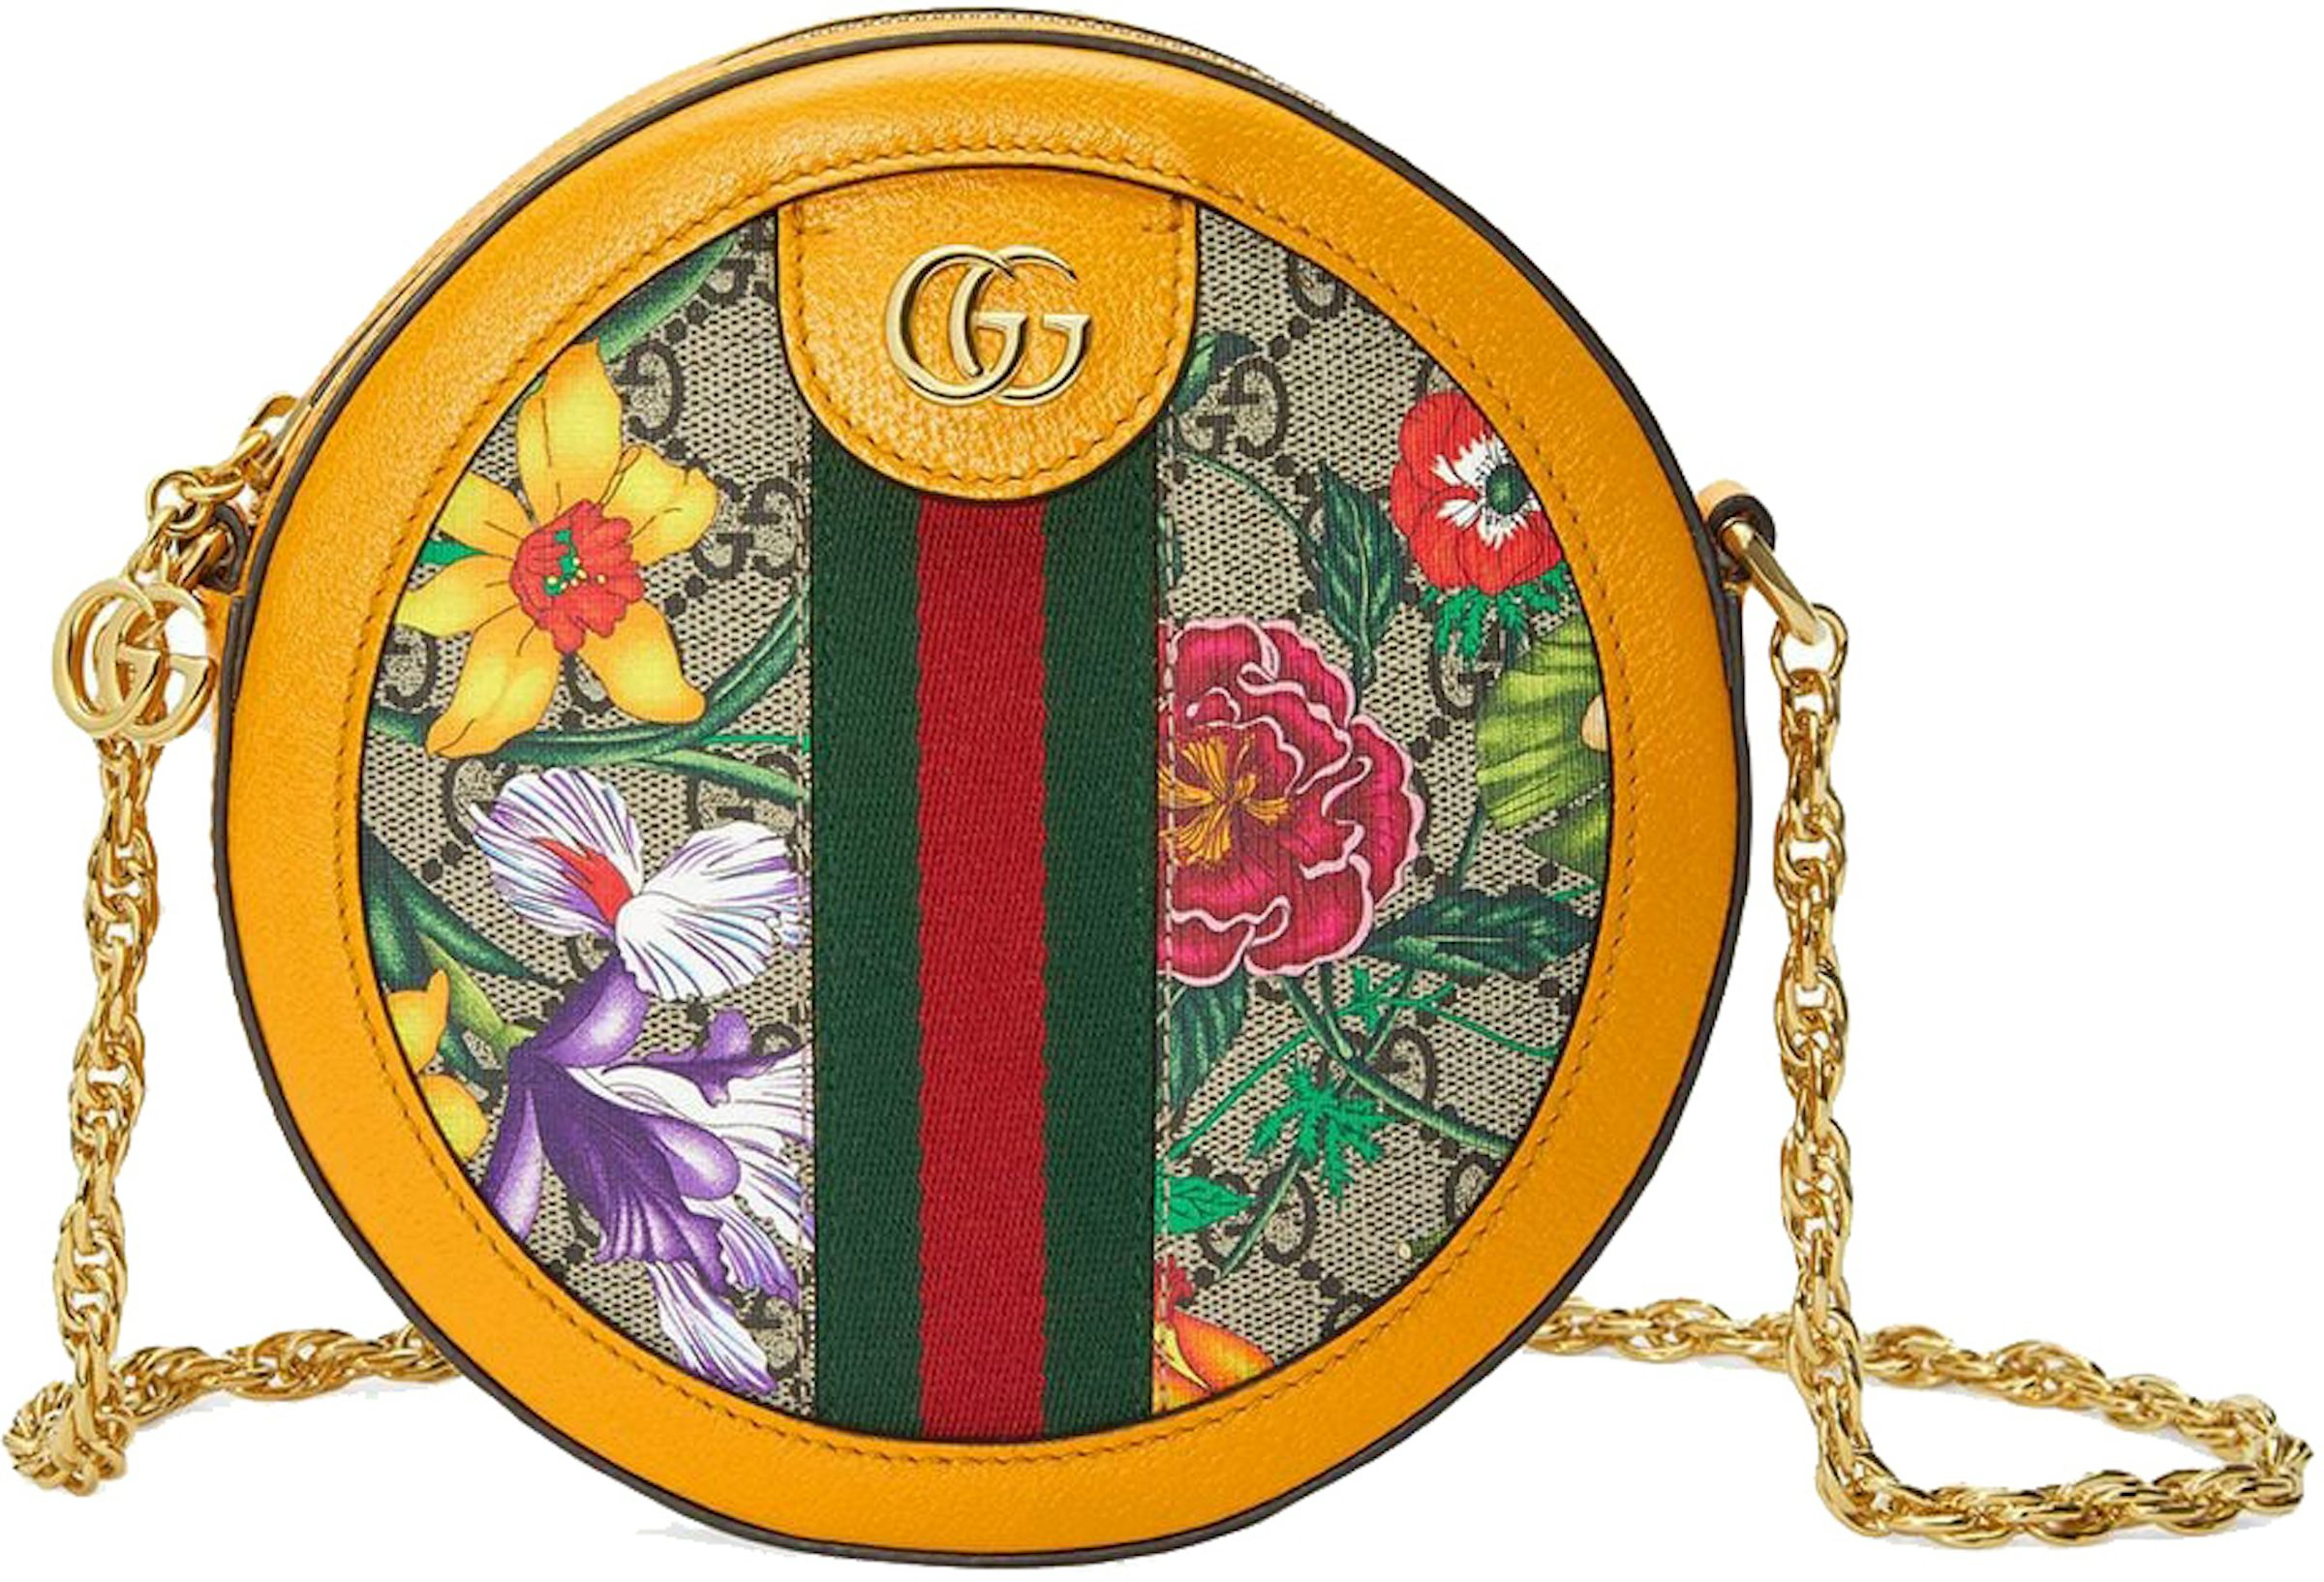 Gucci Multicolor GG Supreme Flora Canvas and Leather Small Ophidia